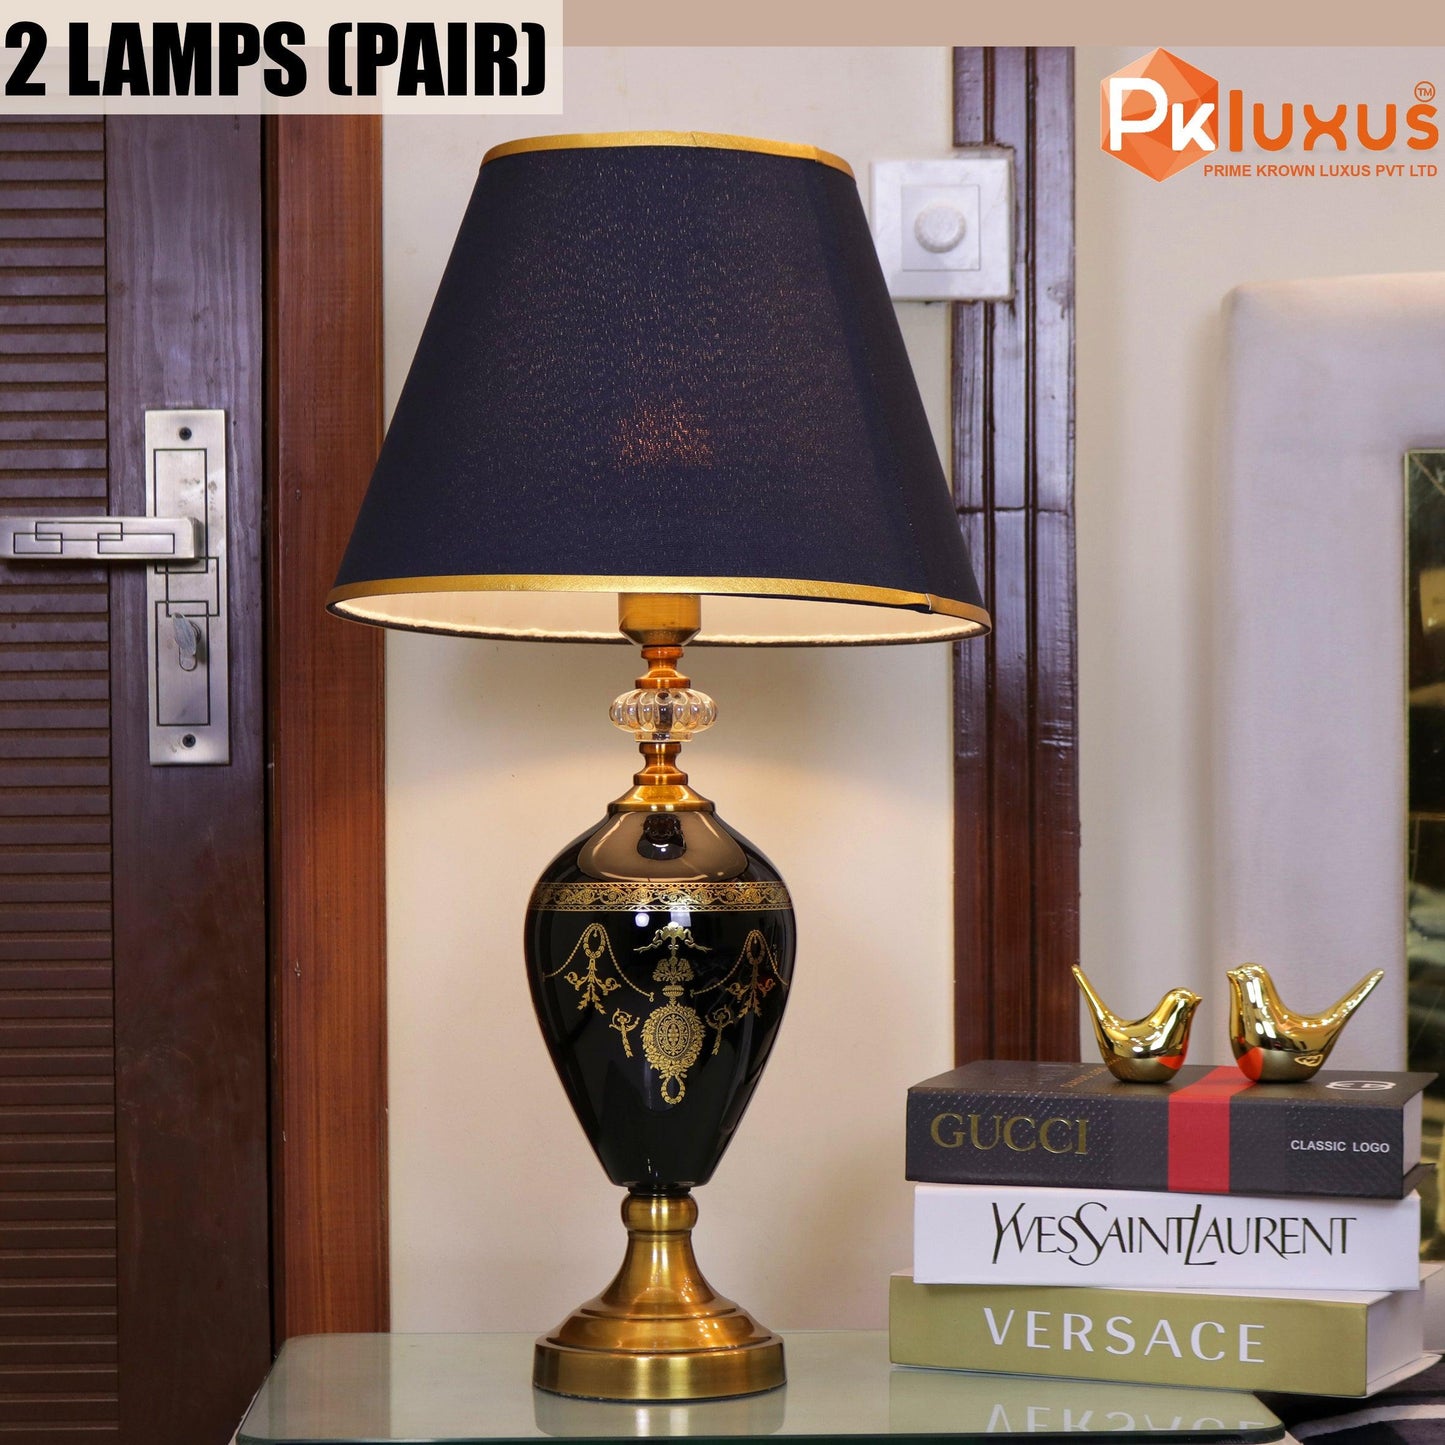 Luxury Black & Gold Arabic Design Table Lamp | PK LUXUS™ - PK LUXUS